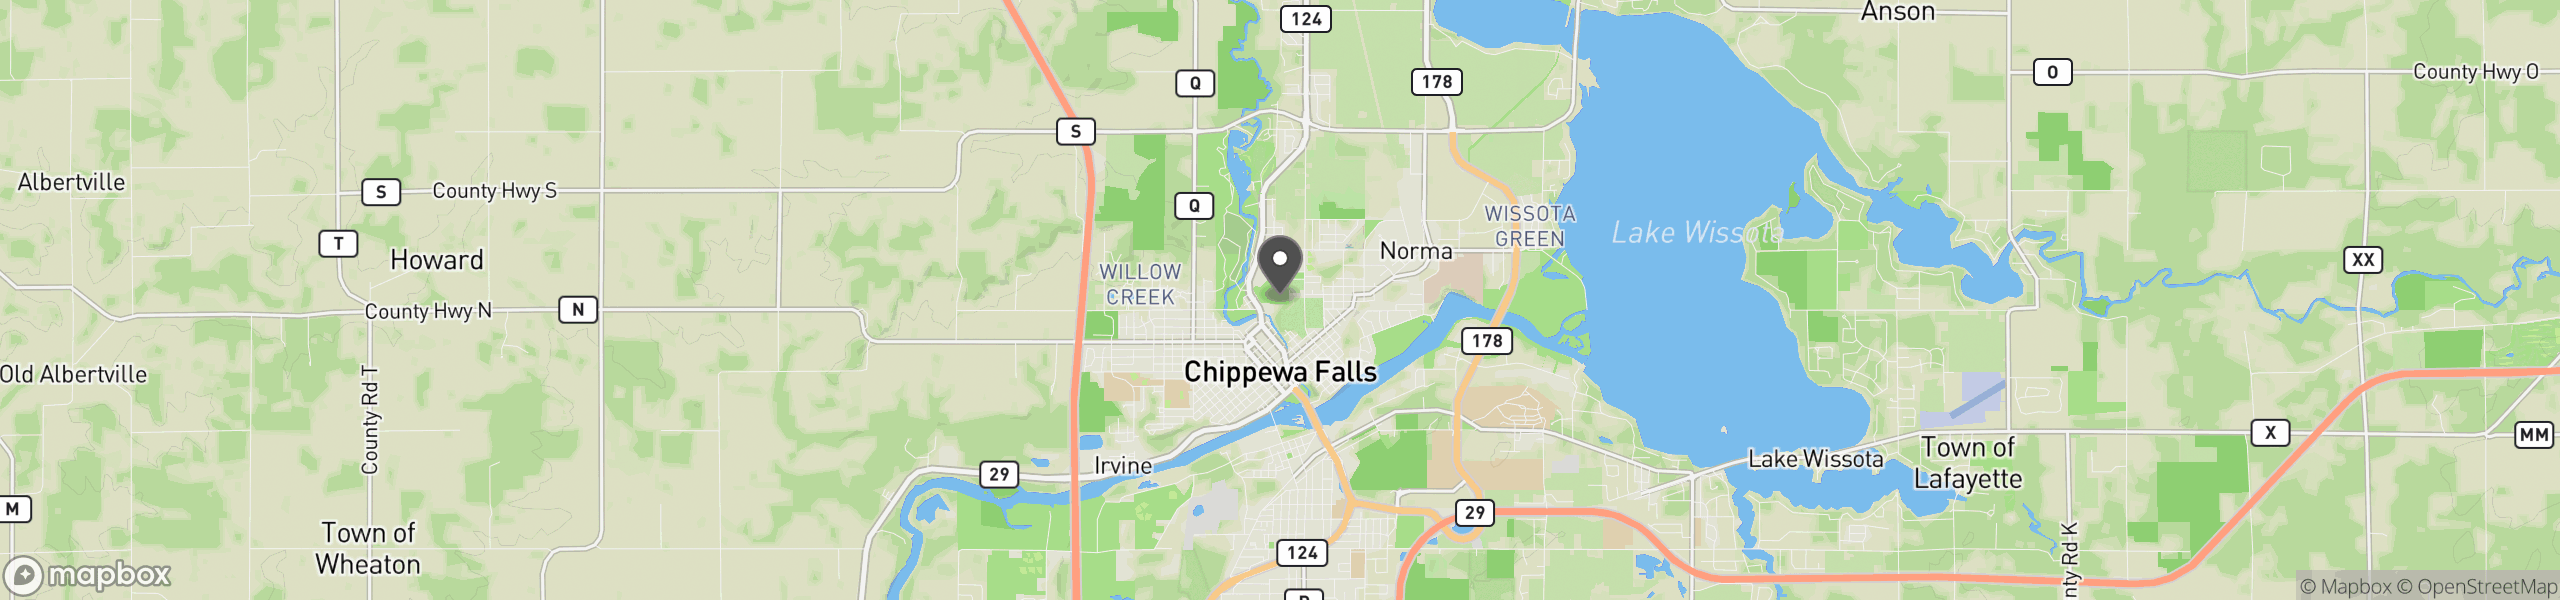 Chippewa Falls, WI 54729